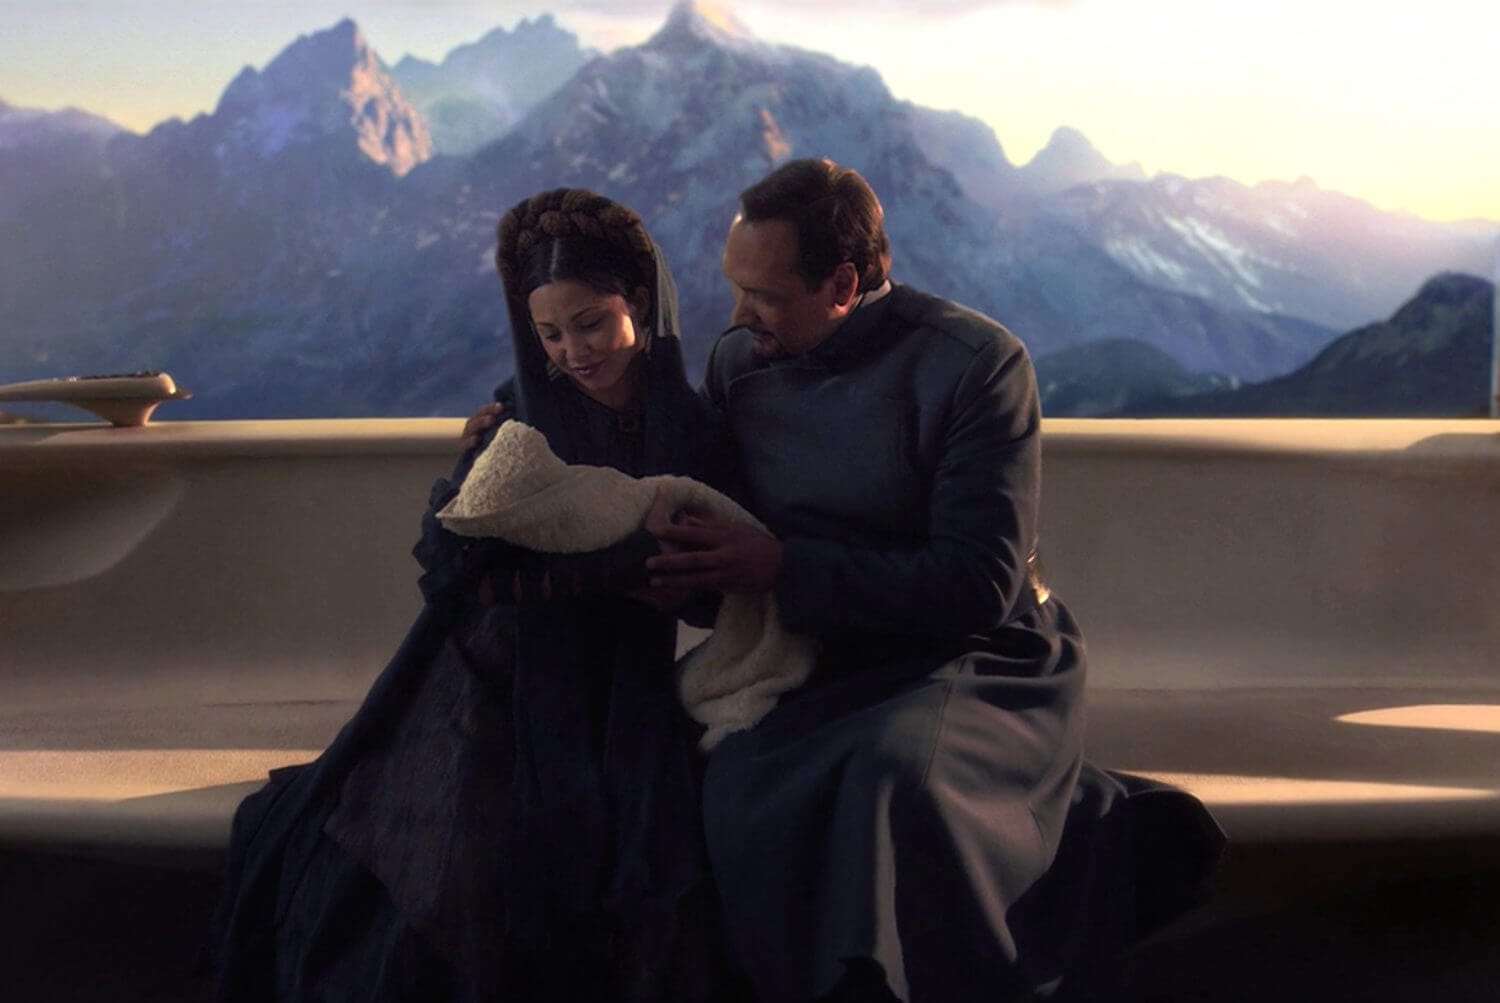 Star Wars Episode III: Leia's arrival on Alderaan